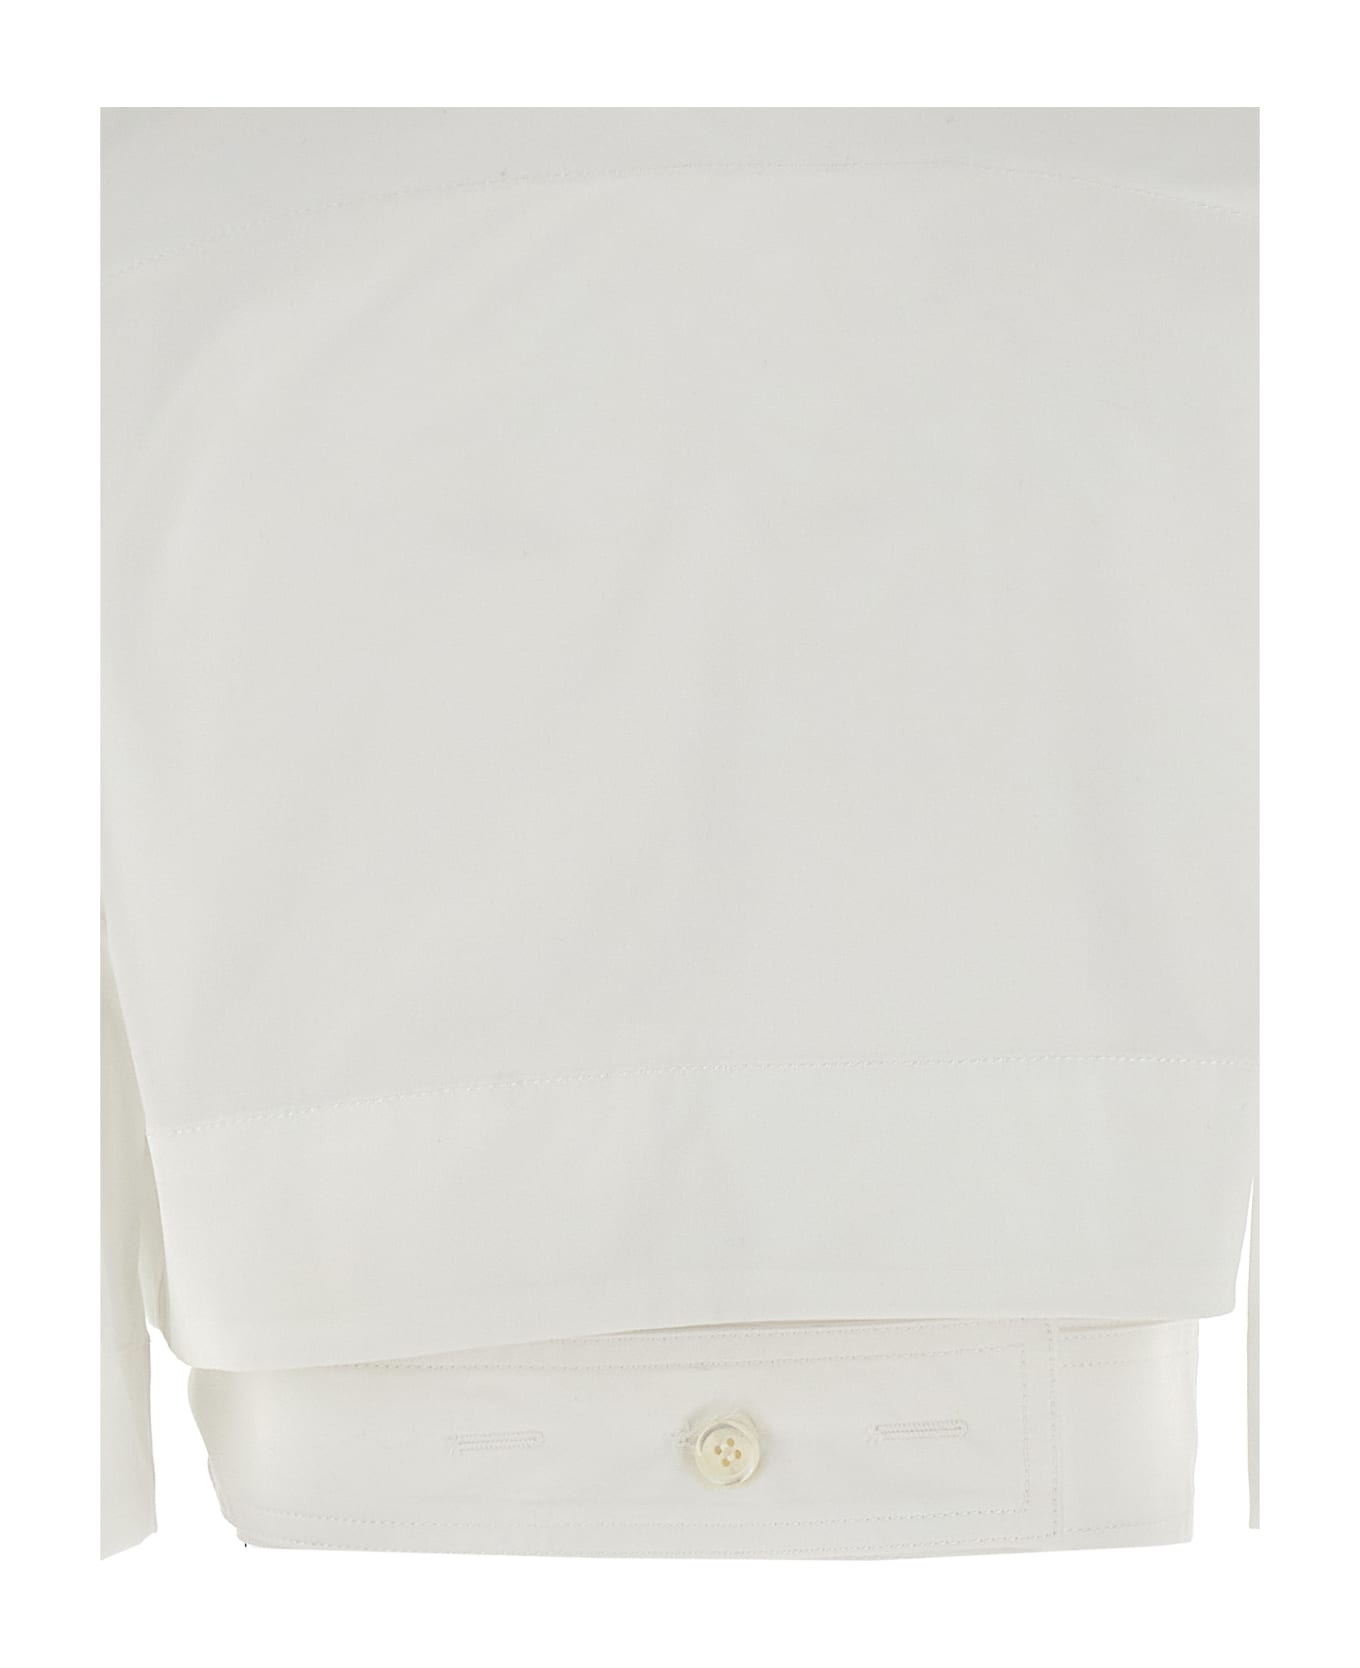 Jacquemus 'la Chemise Courte Bari' Cropped Shirt - White